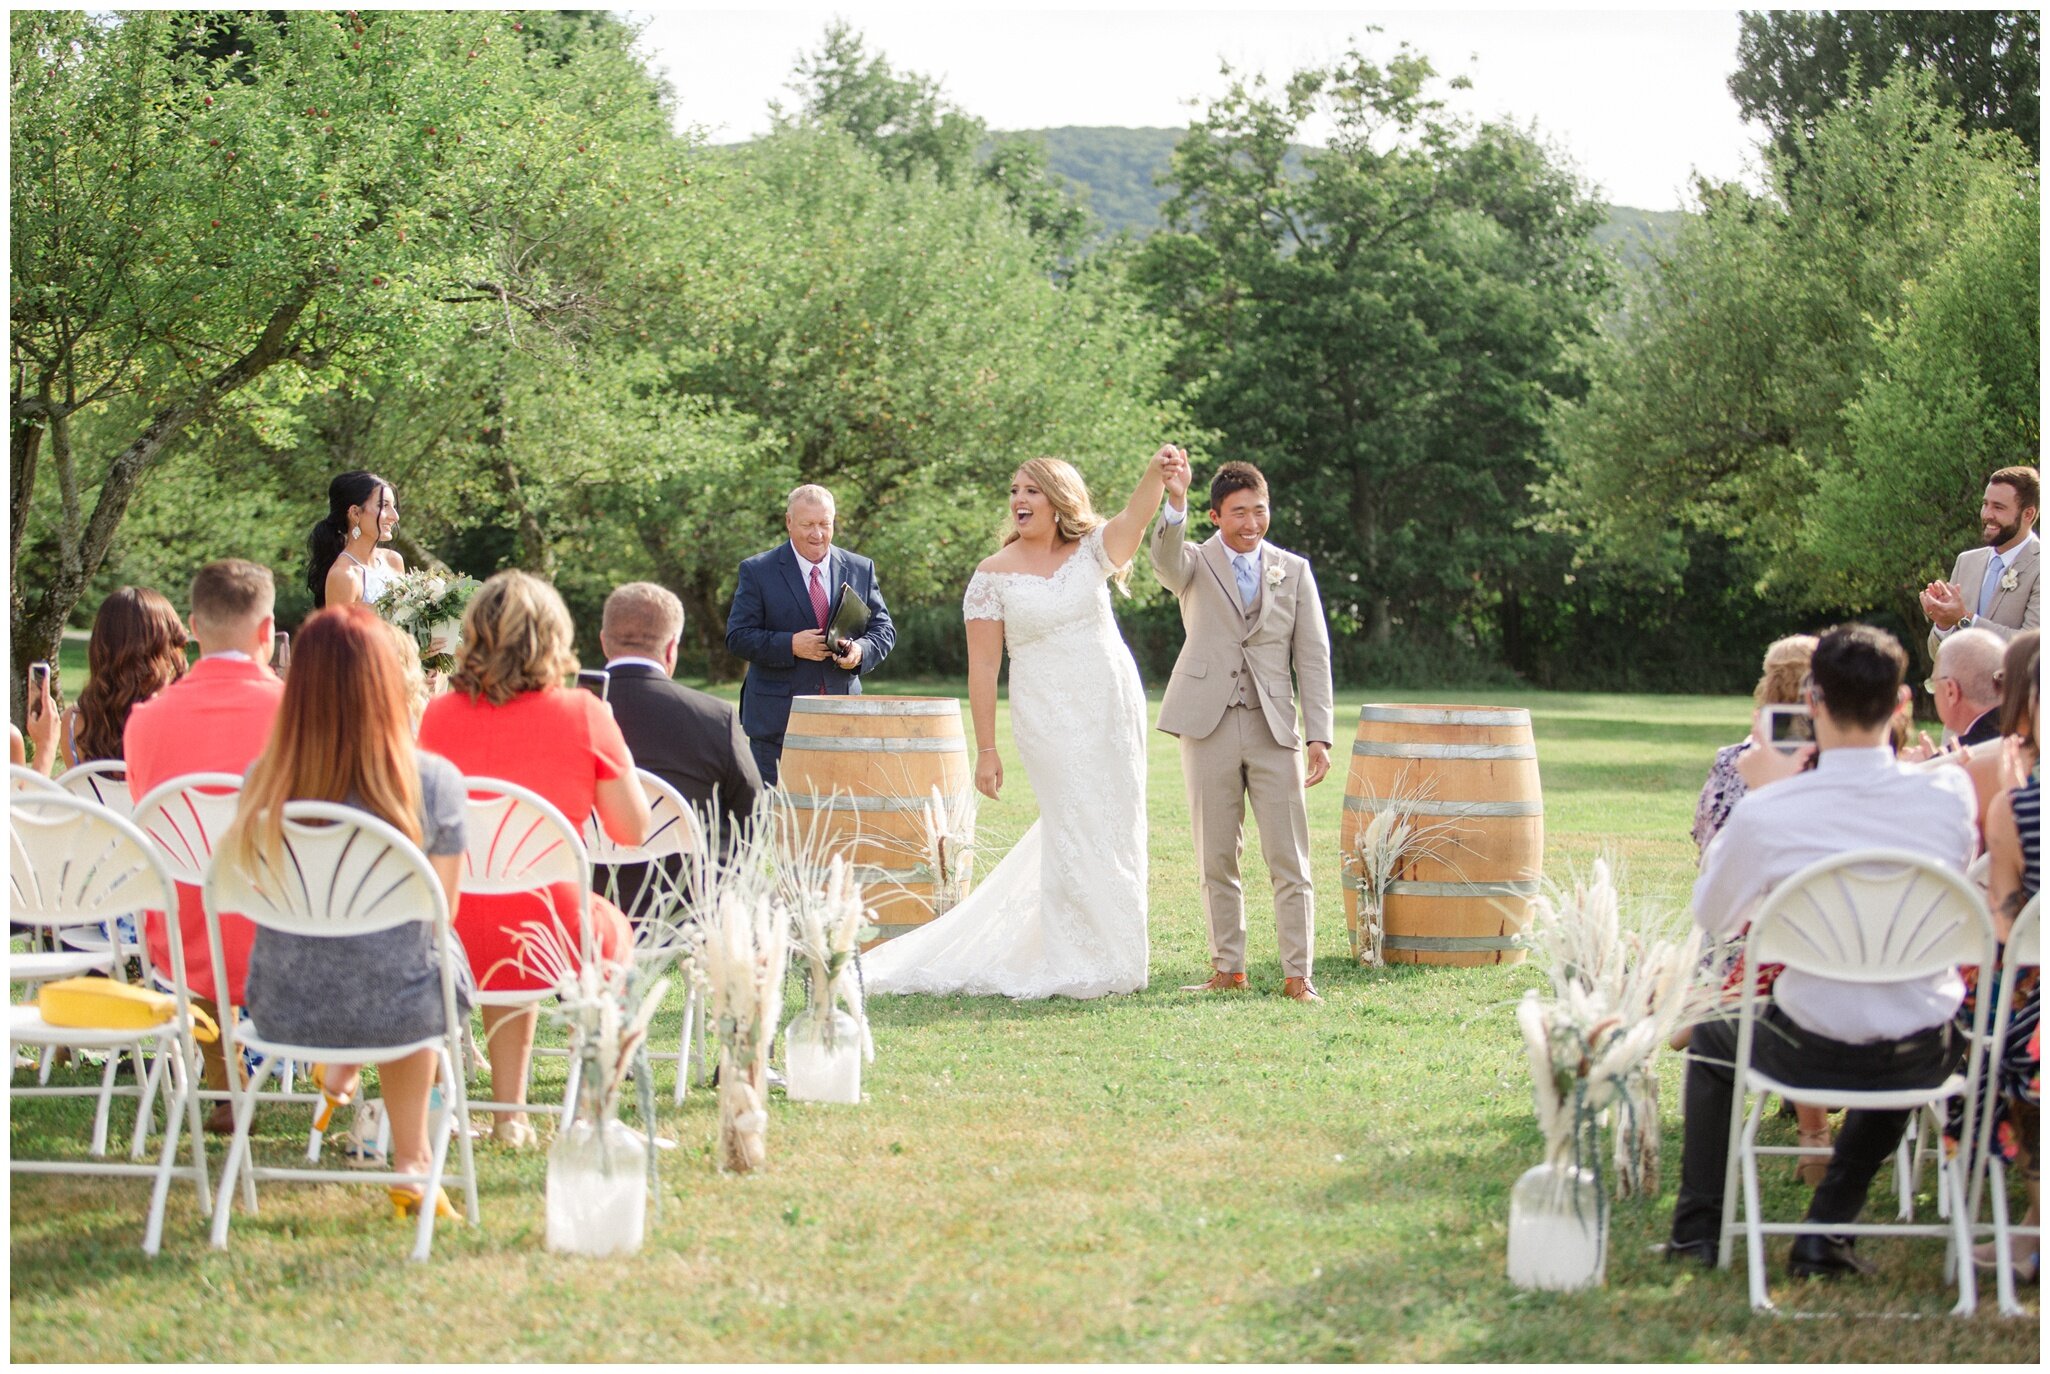 Maiolatesi's Winery Summer Wedding Photos_0025.jpg